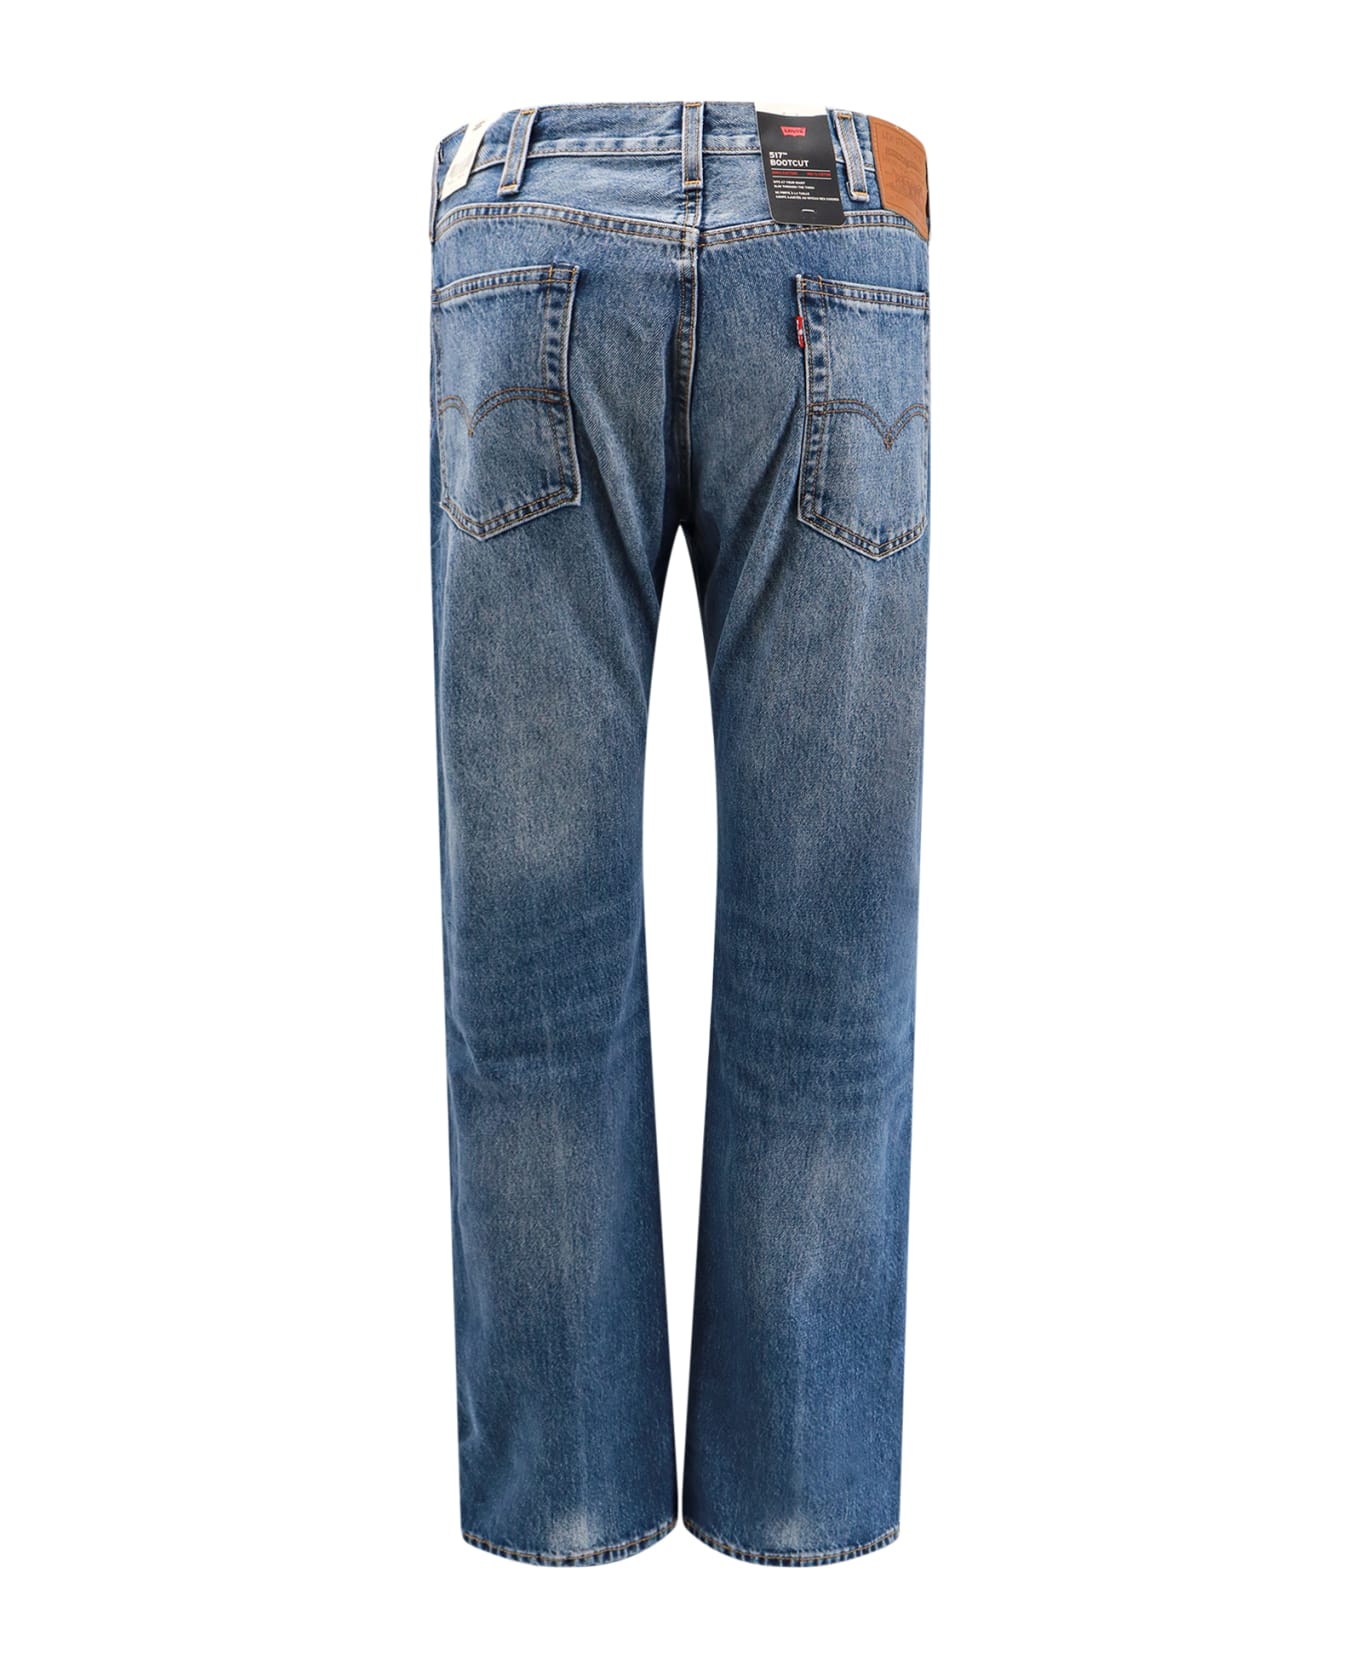 Levi's 517 Bootcut Jeans - Blue デニム